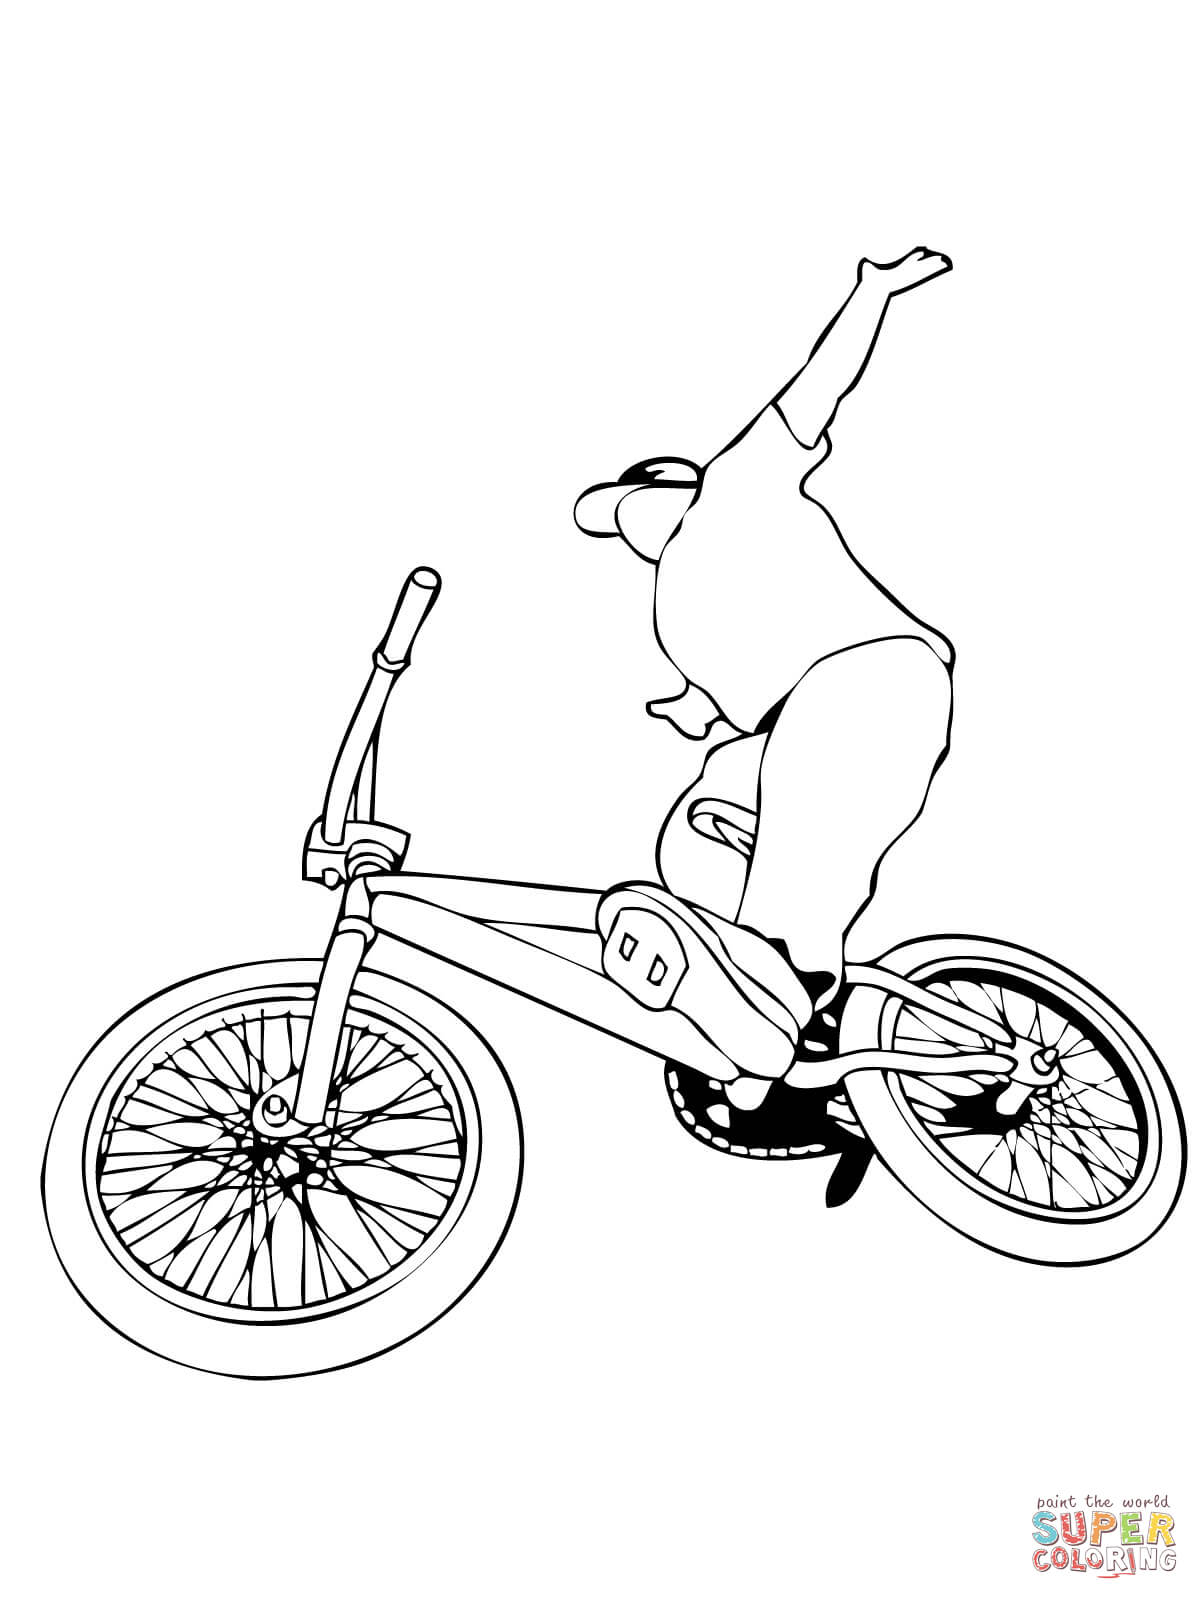 Riding BMX Bike coloring page